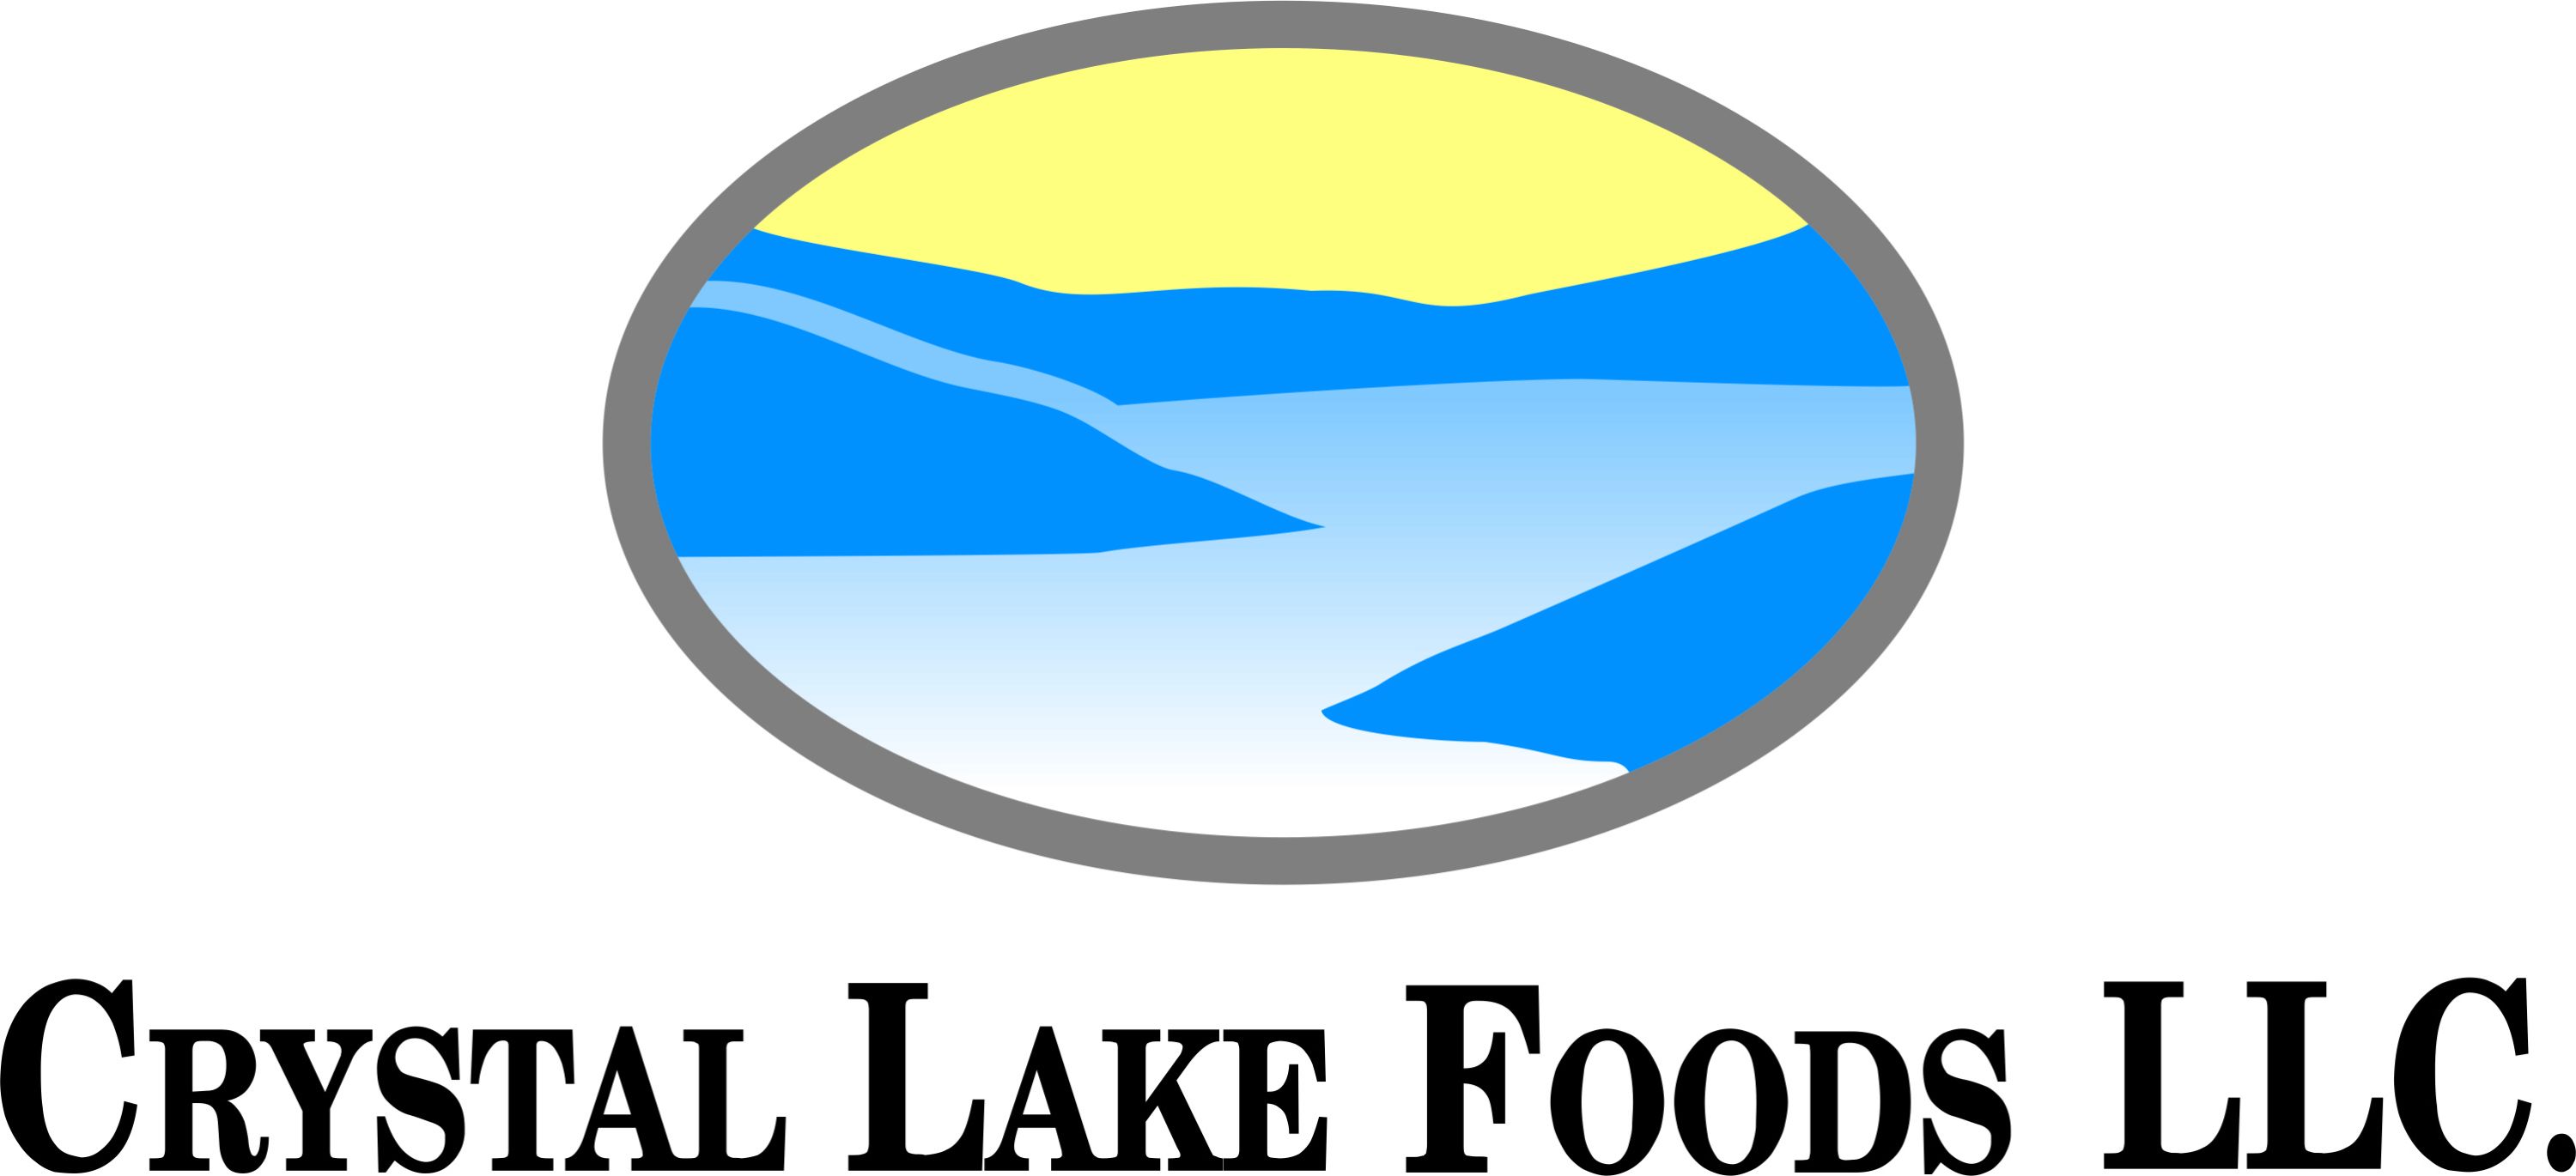 Crystal Lake Foods LLC's Image